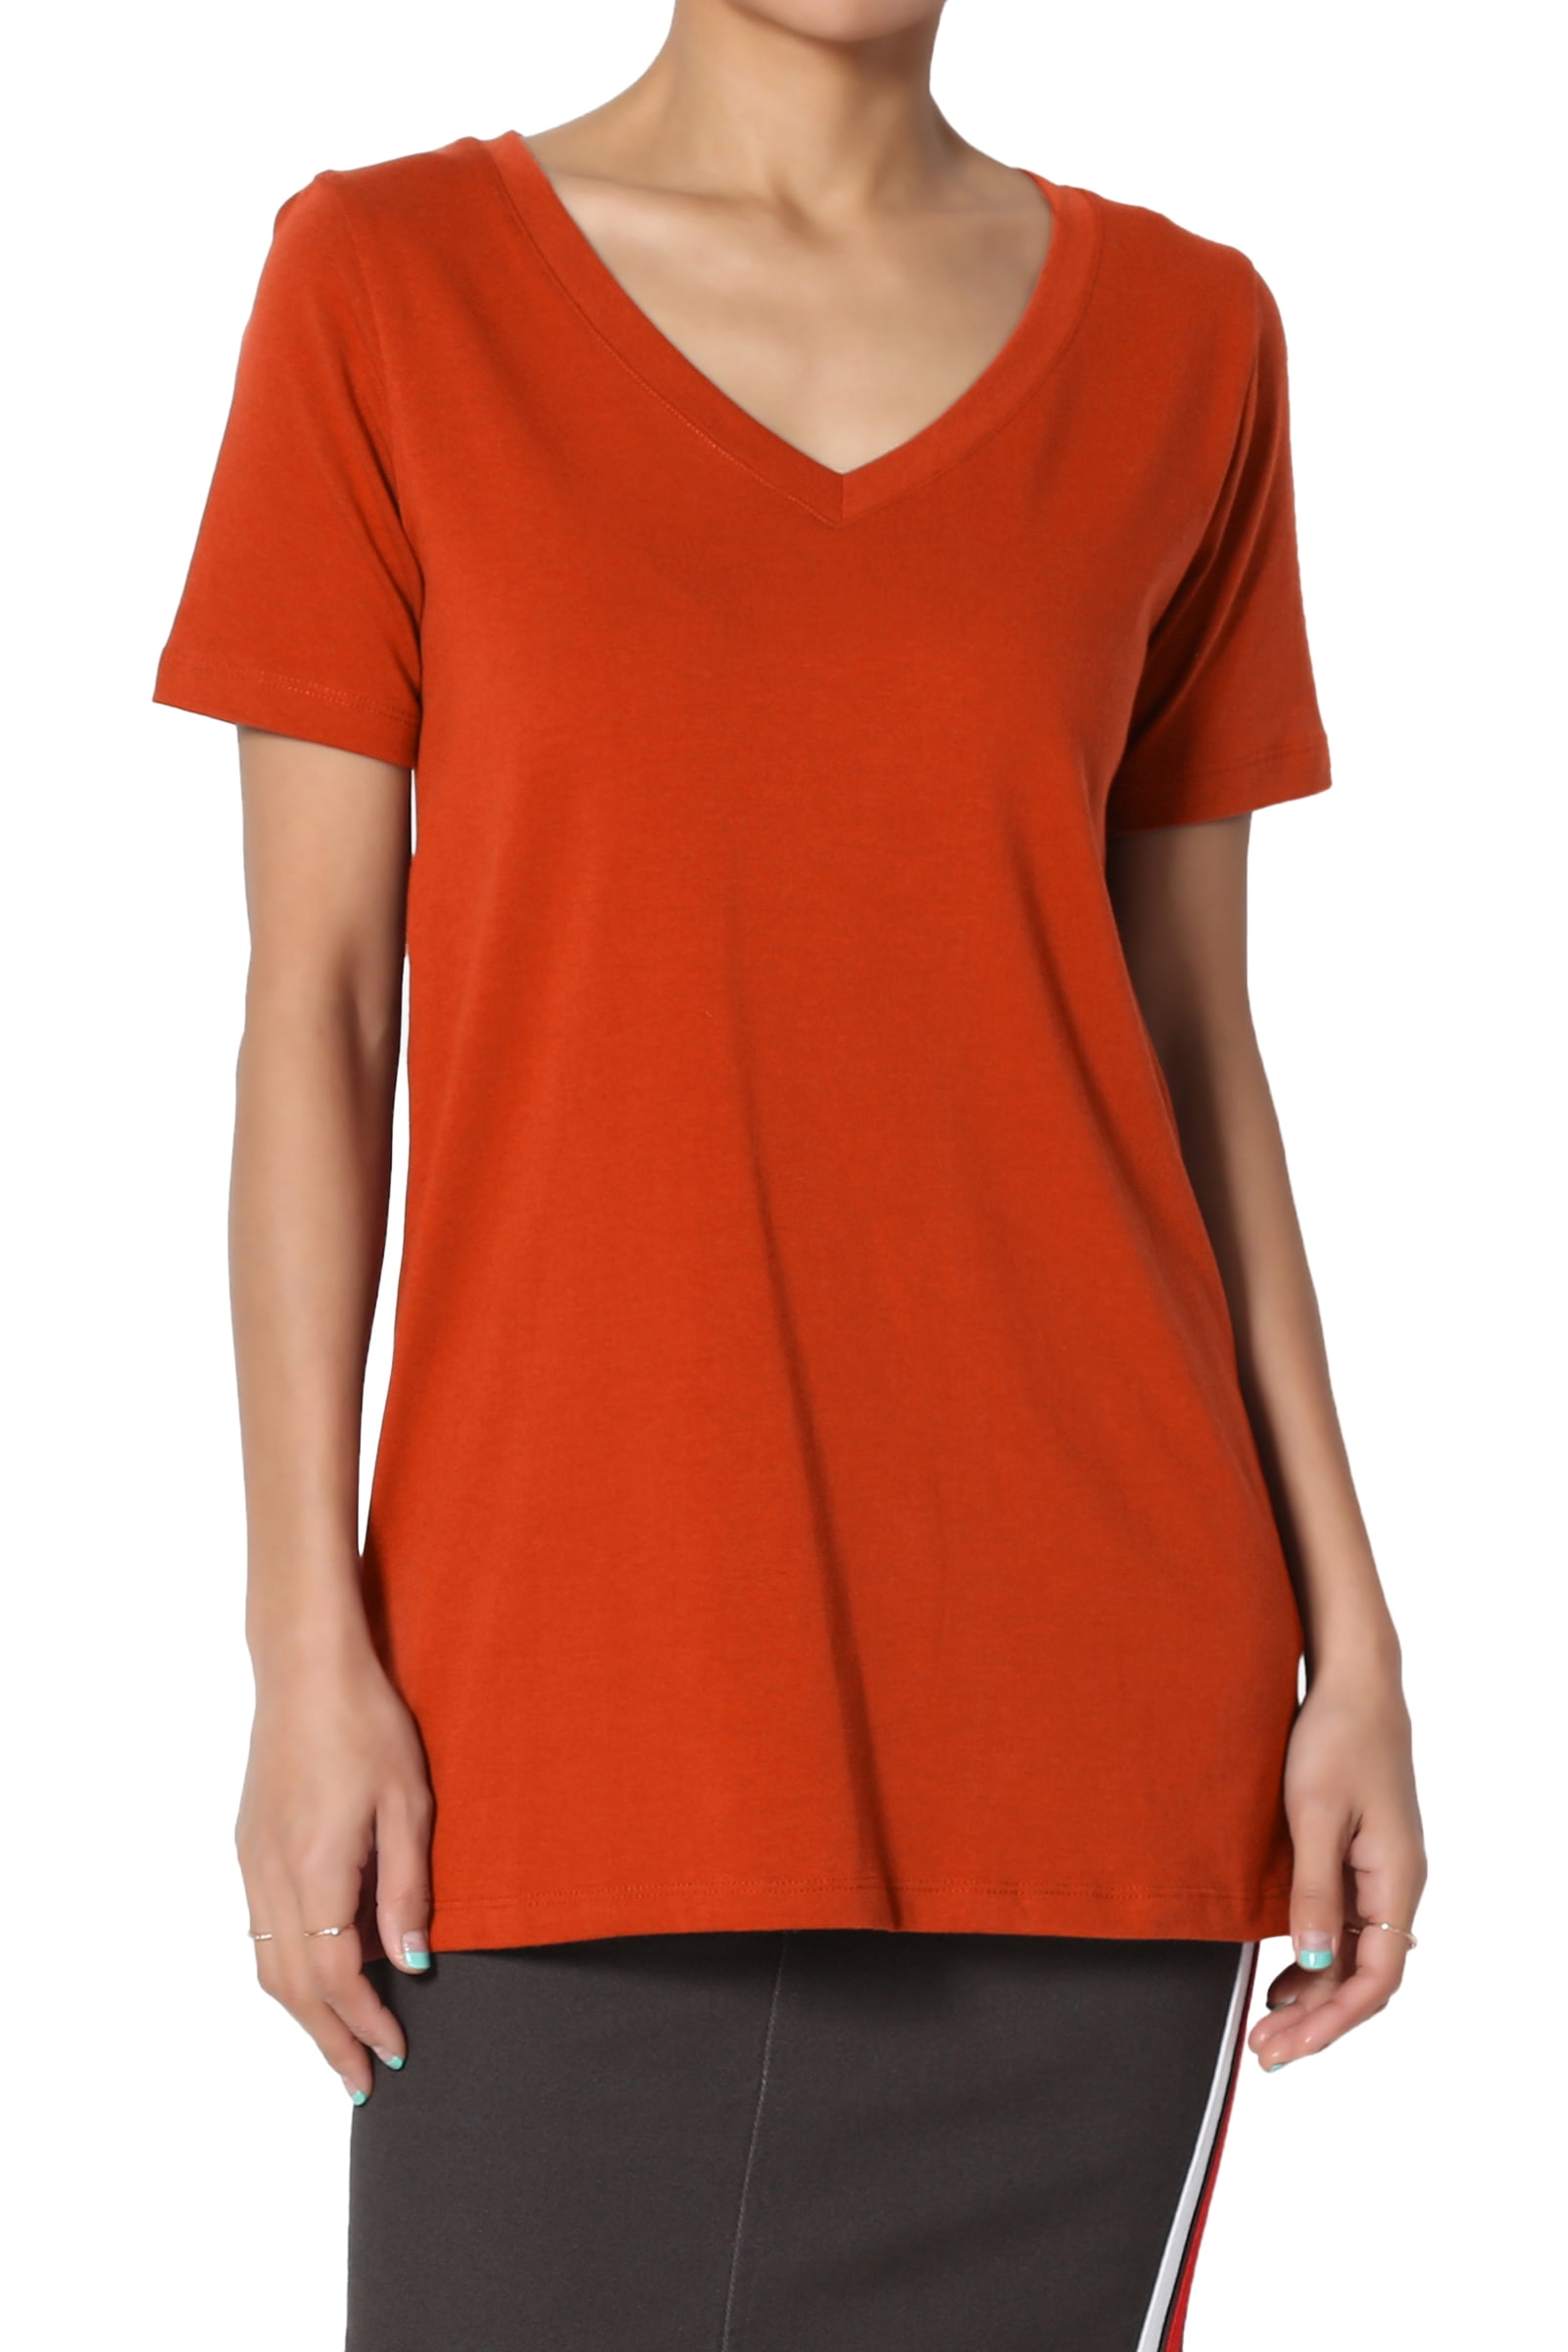 Women's Basic Cotton Span V-Neck Relxed Slim Fit Tee Tunic Length T-Shirt